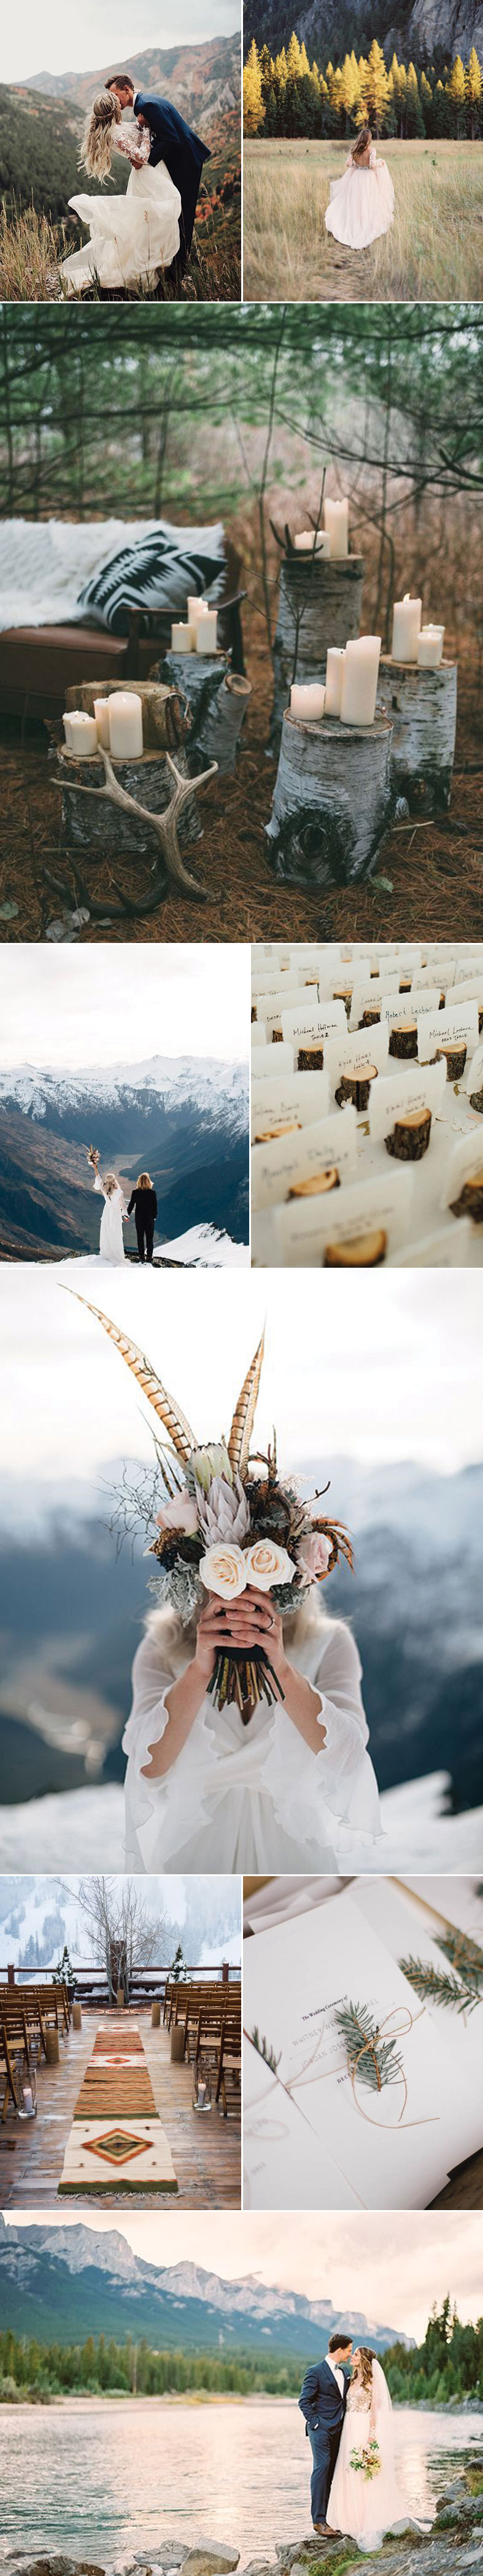 Wedding Ideas For A Mountain Wedding | Groomsmen Tie For Mountain Wedding